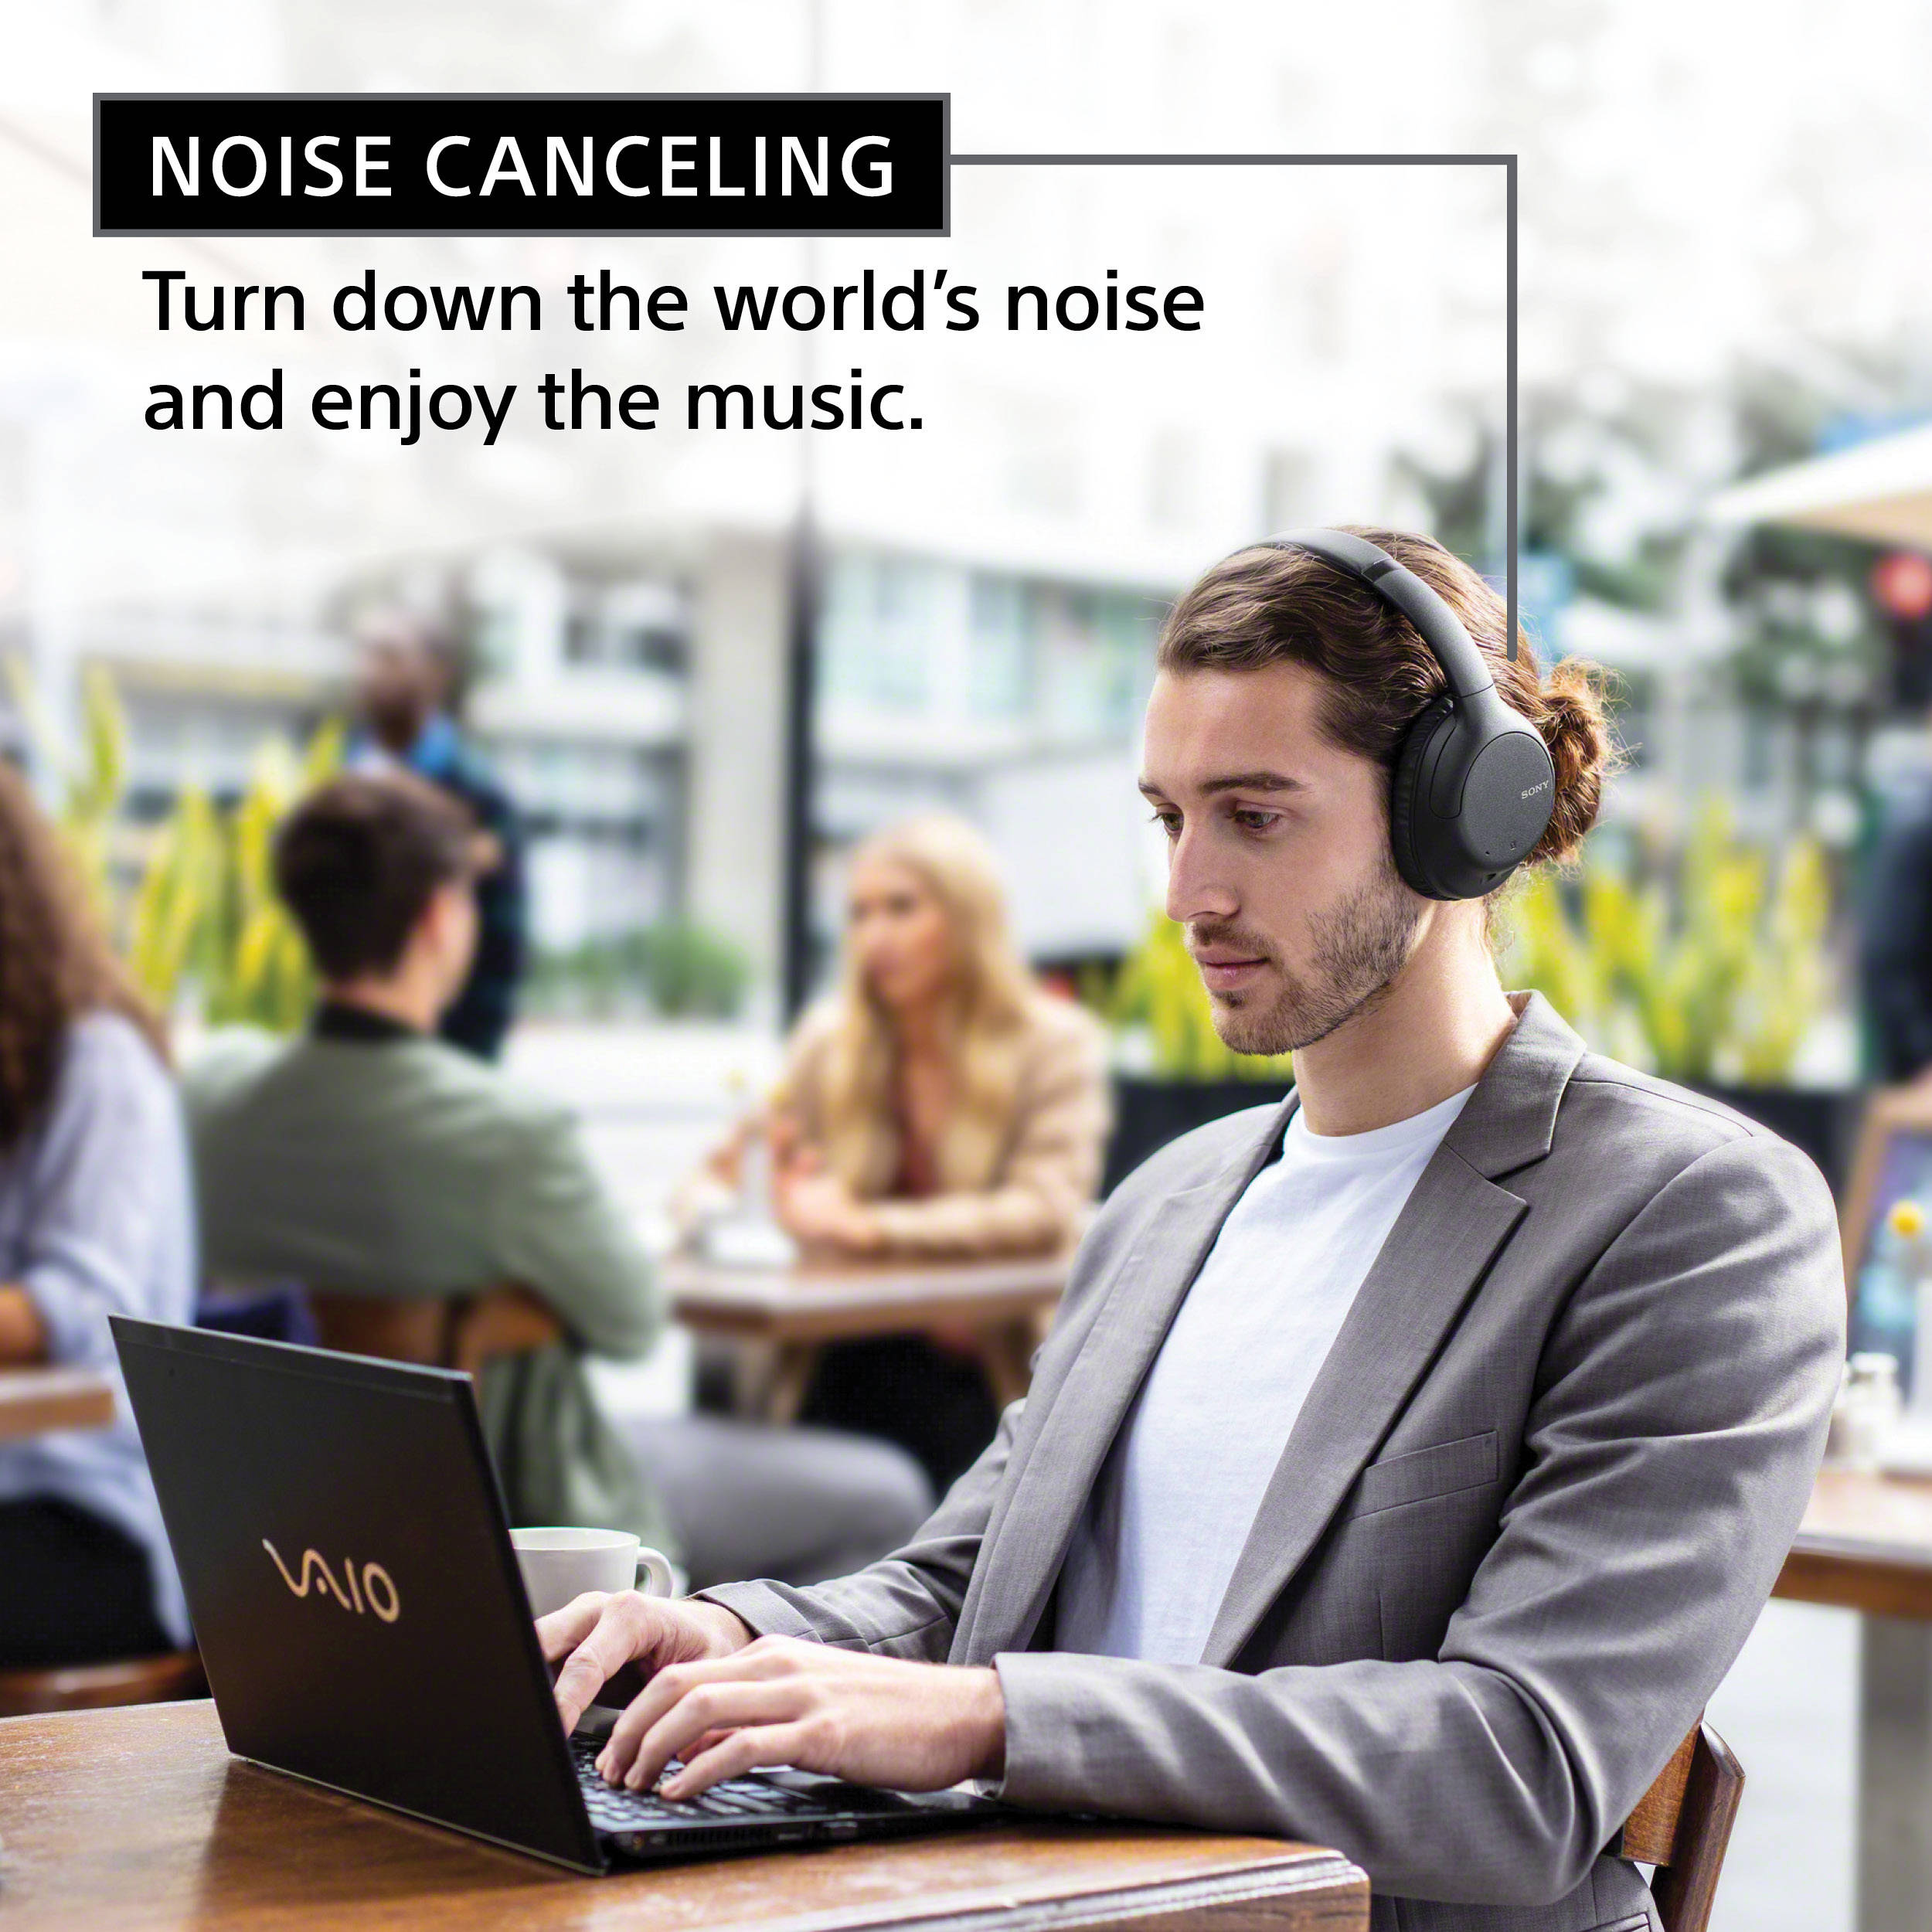 Sony WH-CH710N Noise-Canceling Wireless Over-Ear Headphones